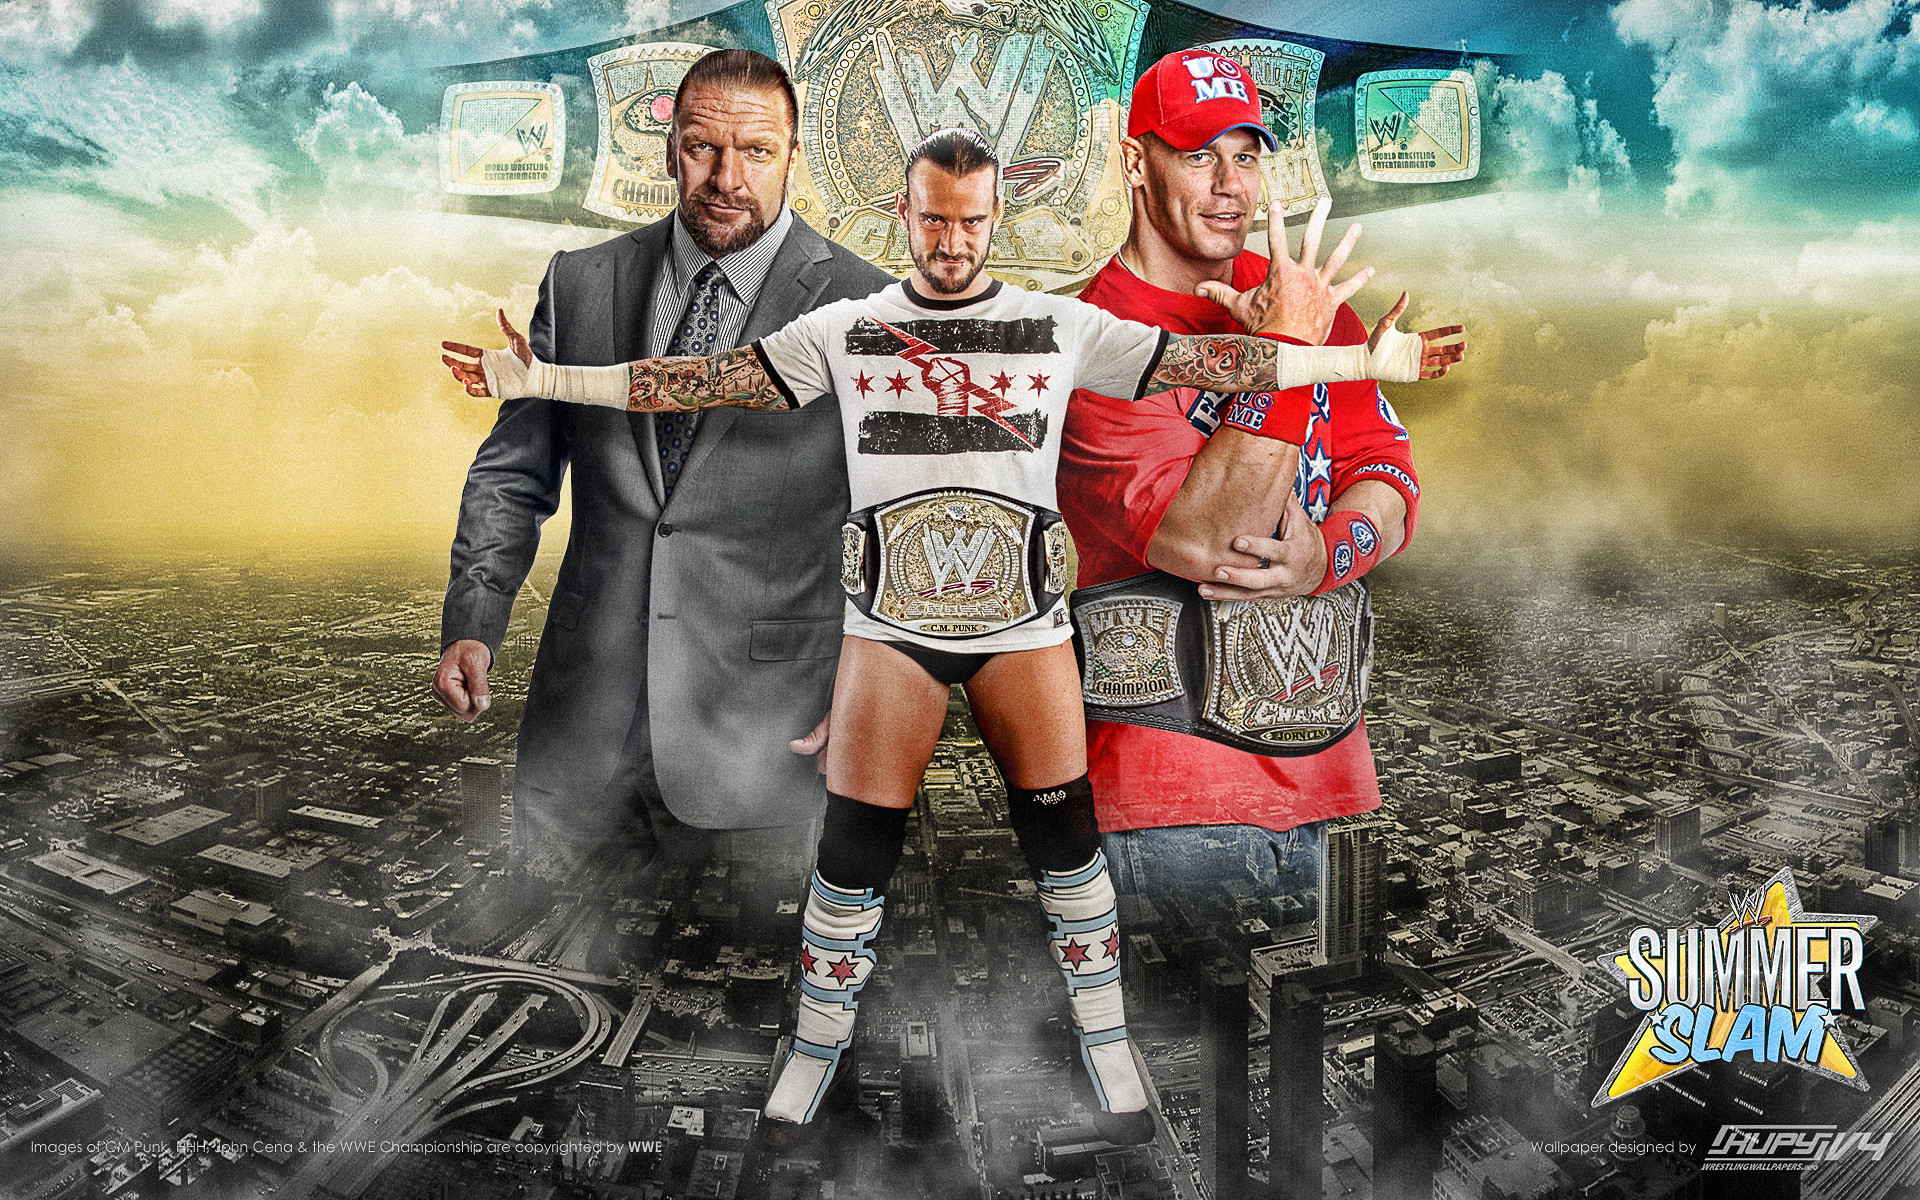 1920x1200 1920x1080 The Shield vs The Nexus WWE 2K16 6 man tag team match